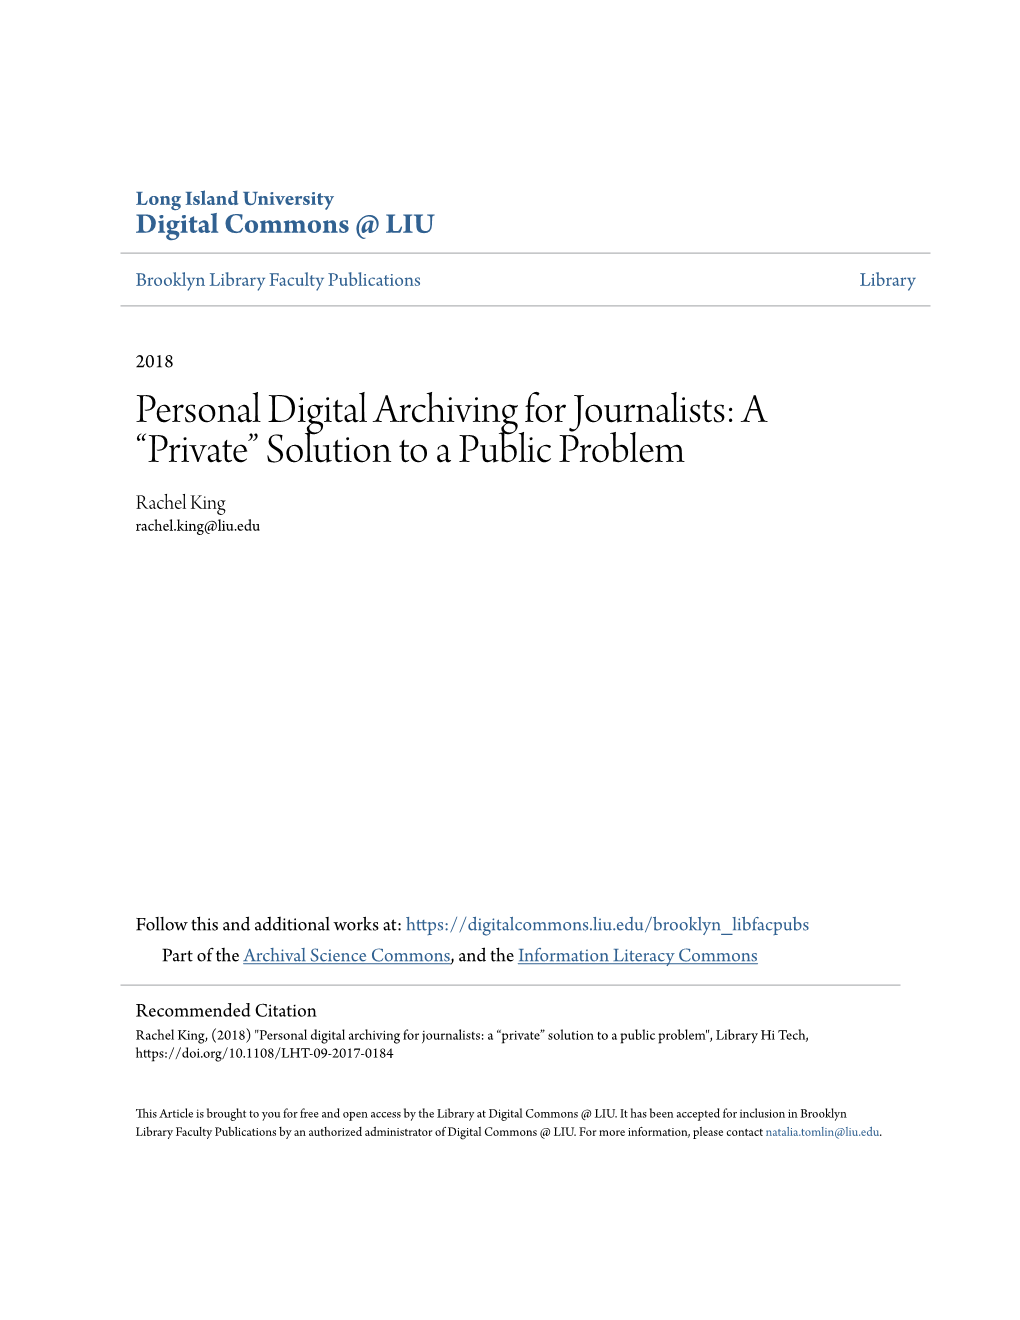 Personal Digital Archiving for Journalists: a “Private” Solution to a Public Problem Rachel King Rachel.King@Liu.Edu